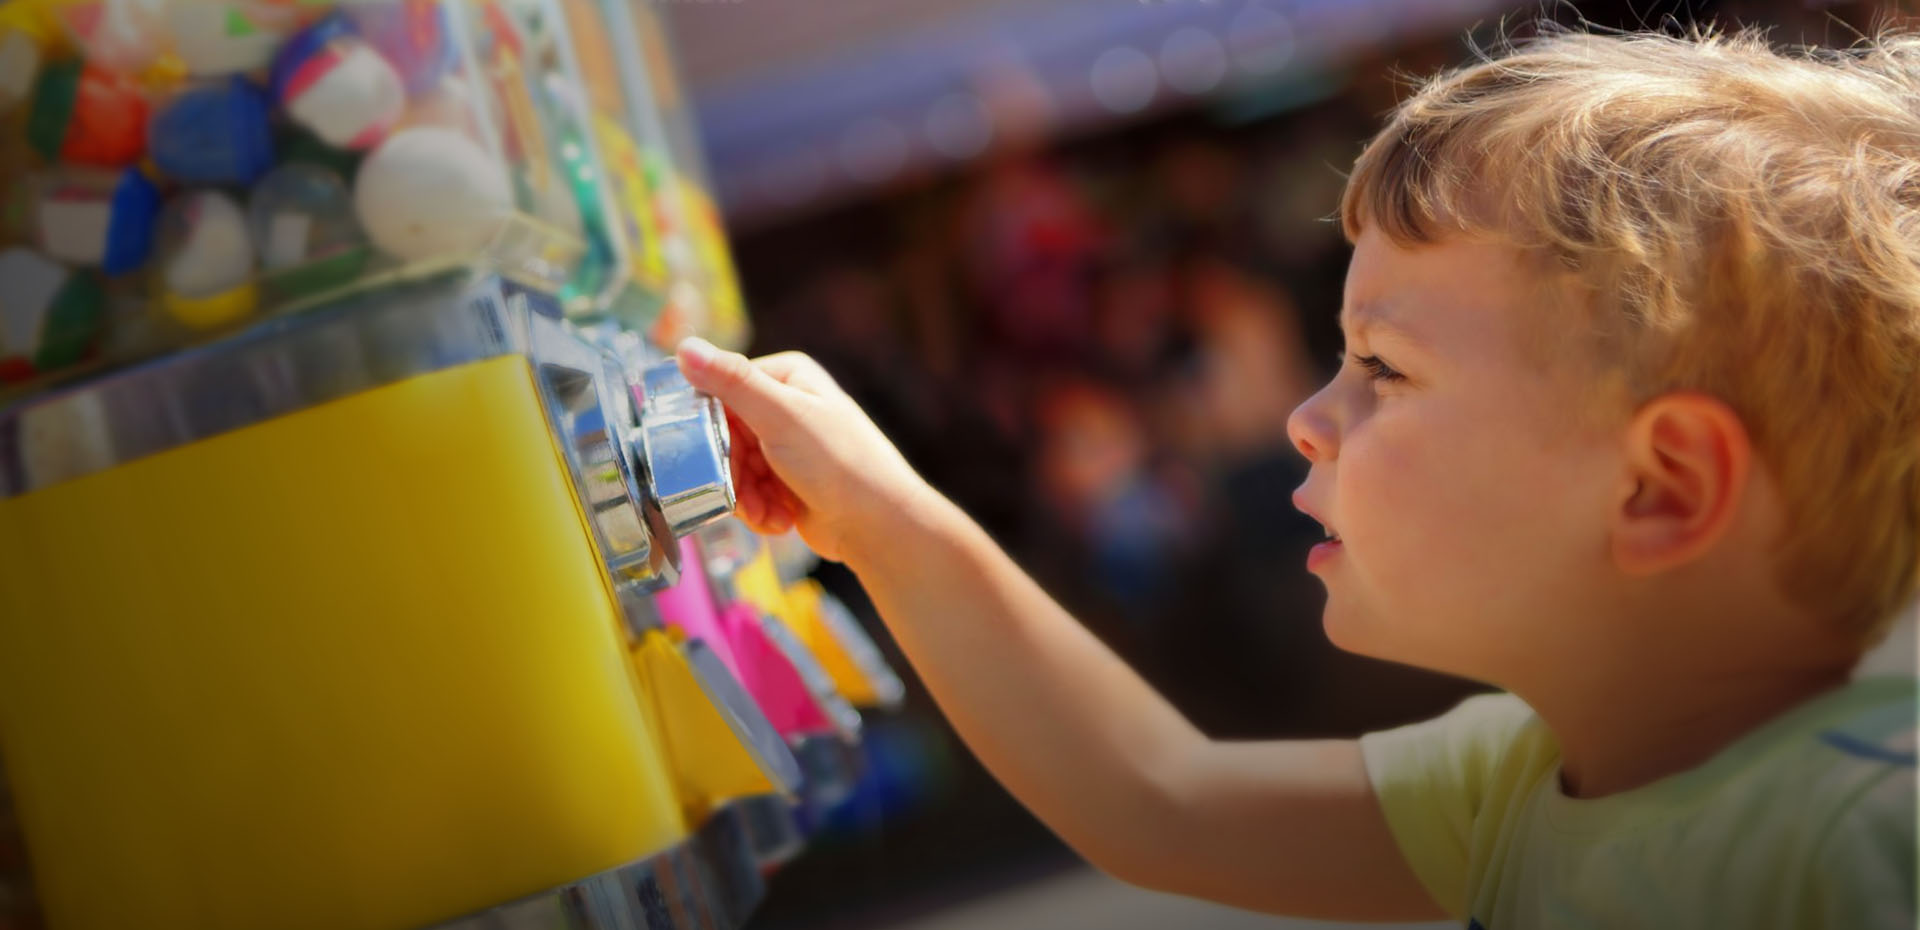 Installers Of Toys Vending Machines For Restaurants